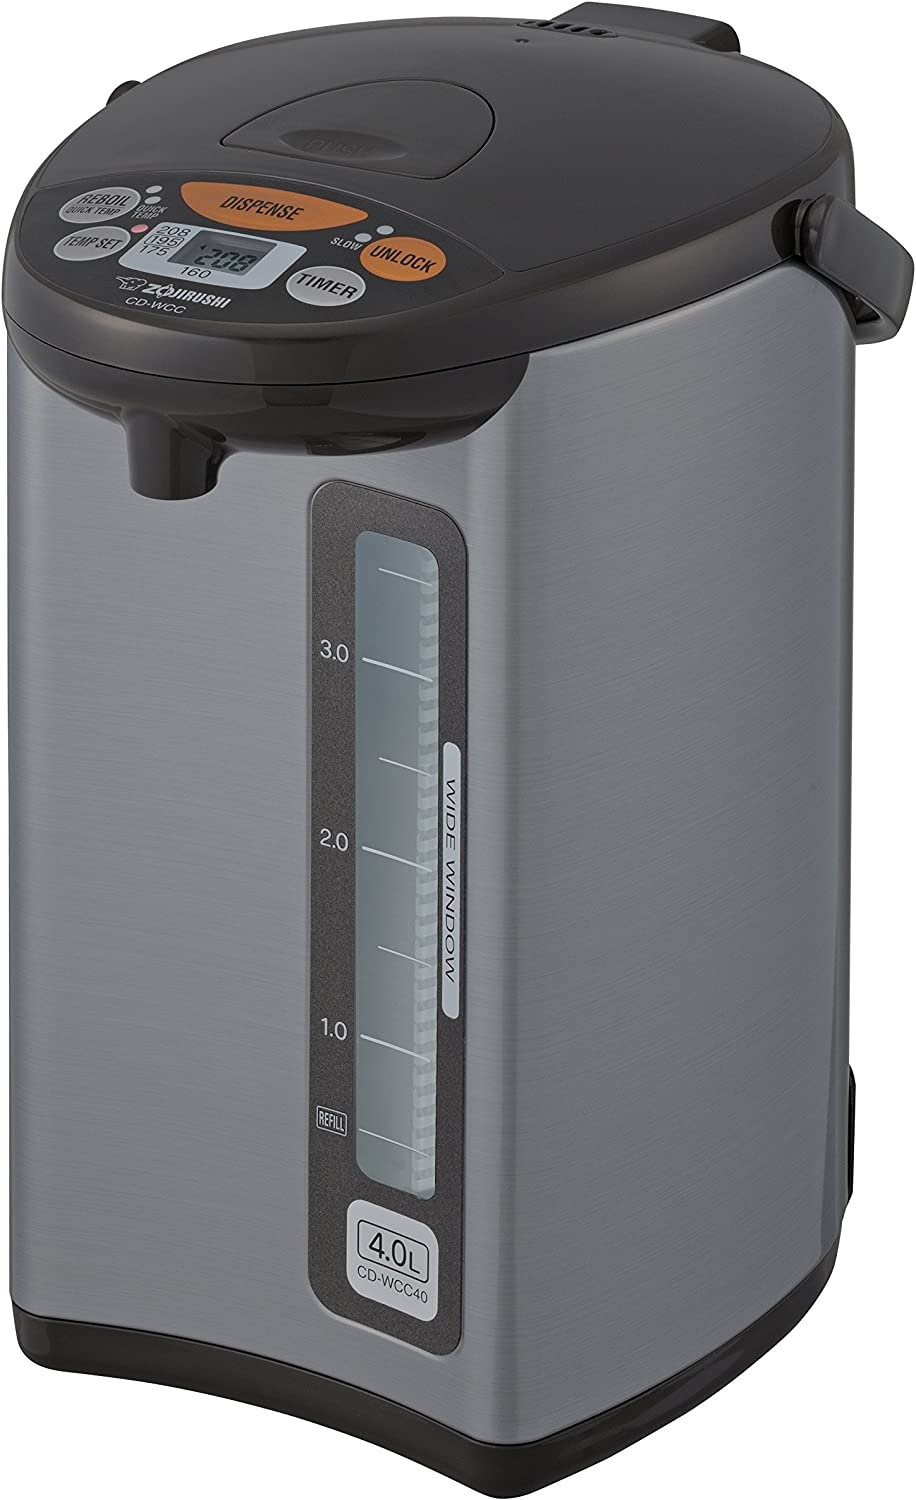 Zojirushi Micom Water Boiler & Warmer, 135 oz. / 4.0 Liters, Silver Import To Shop ×Product customization General Description